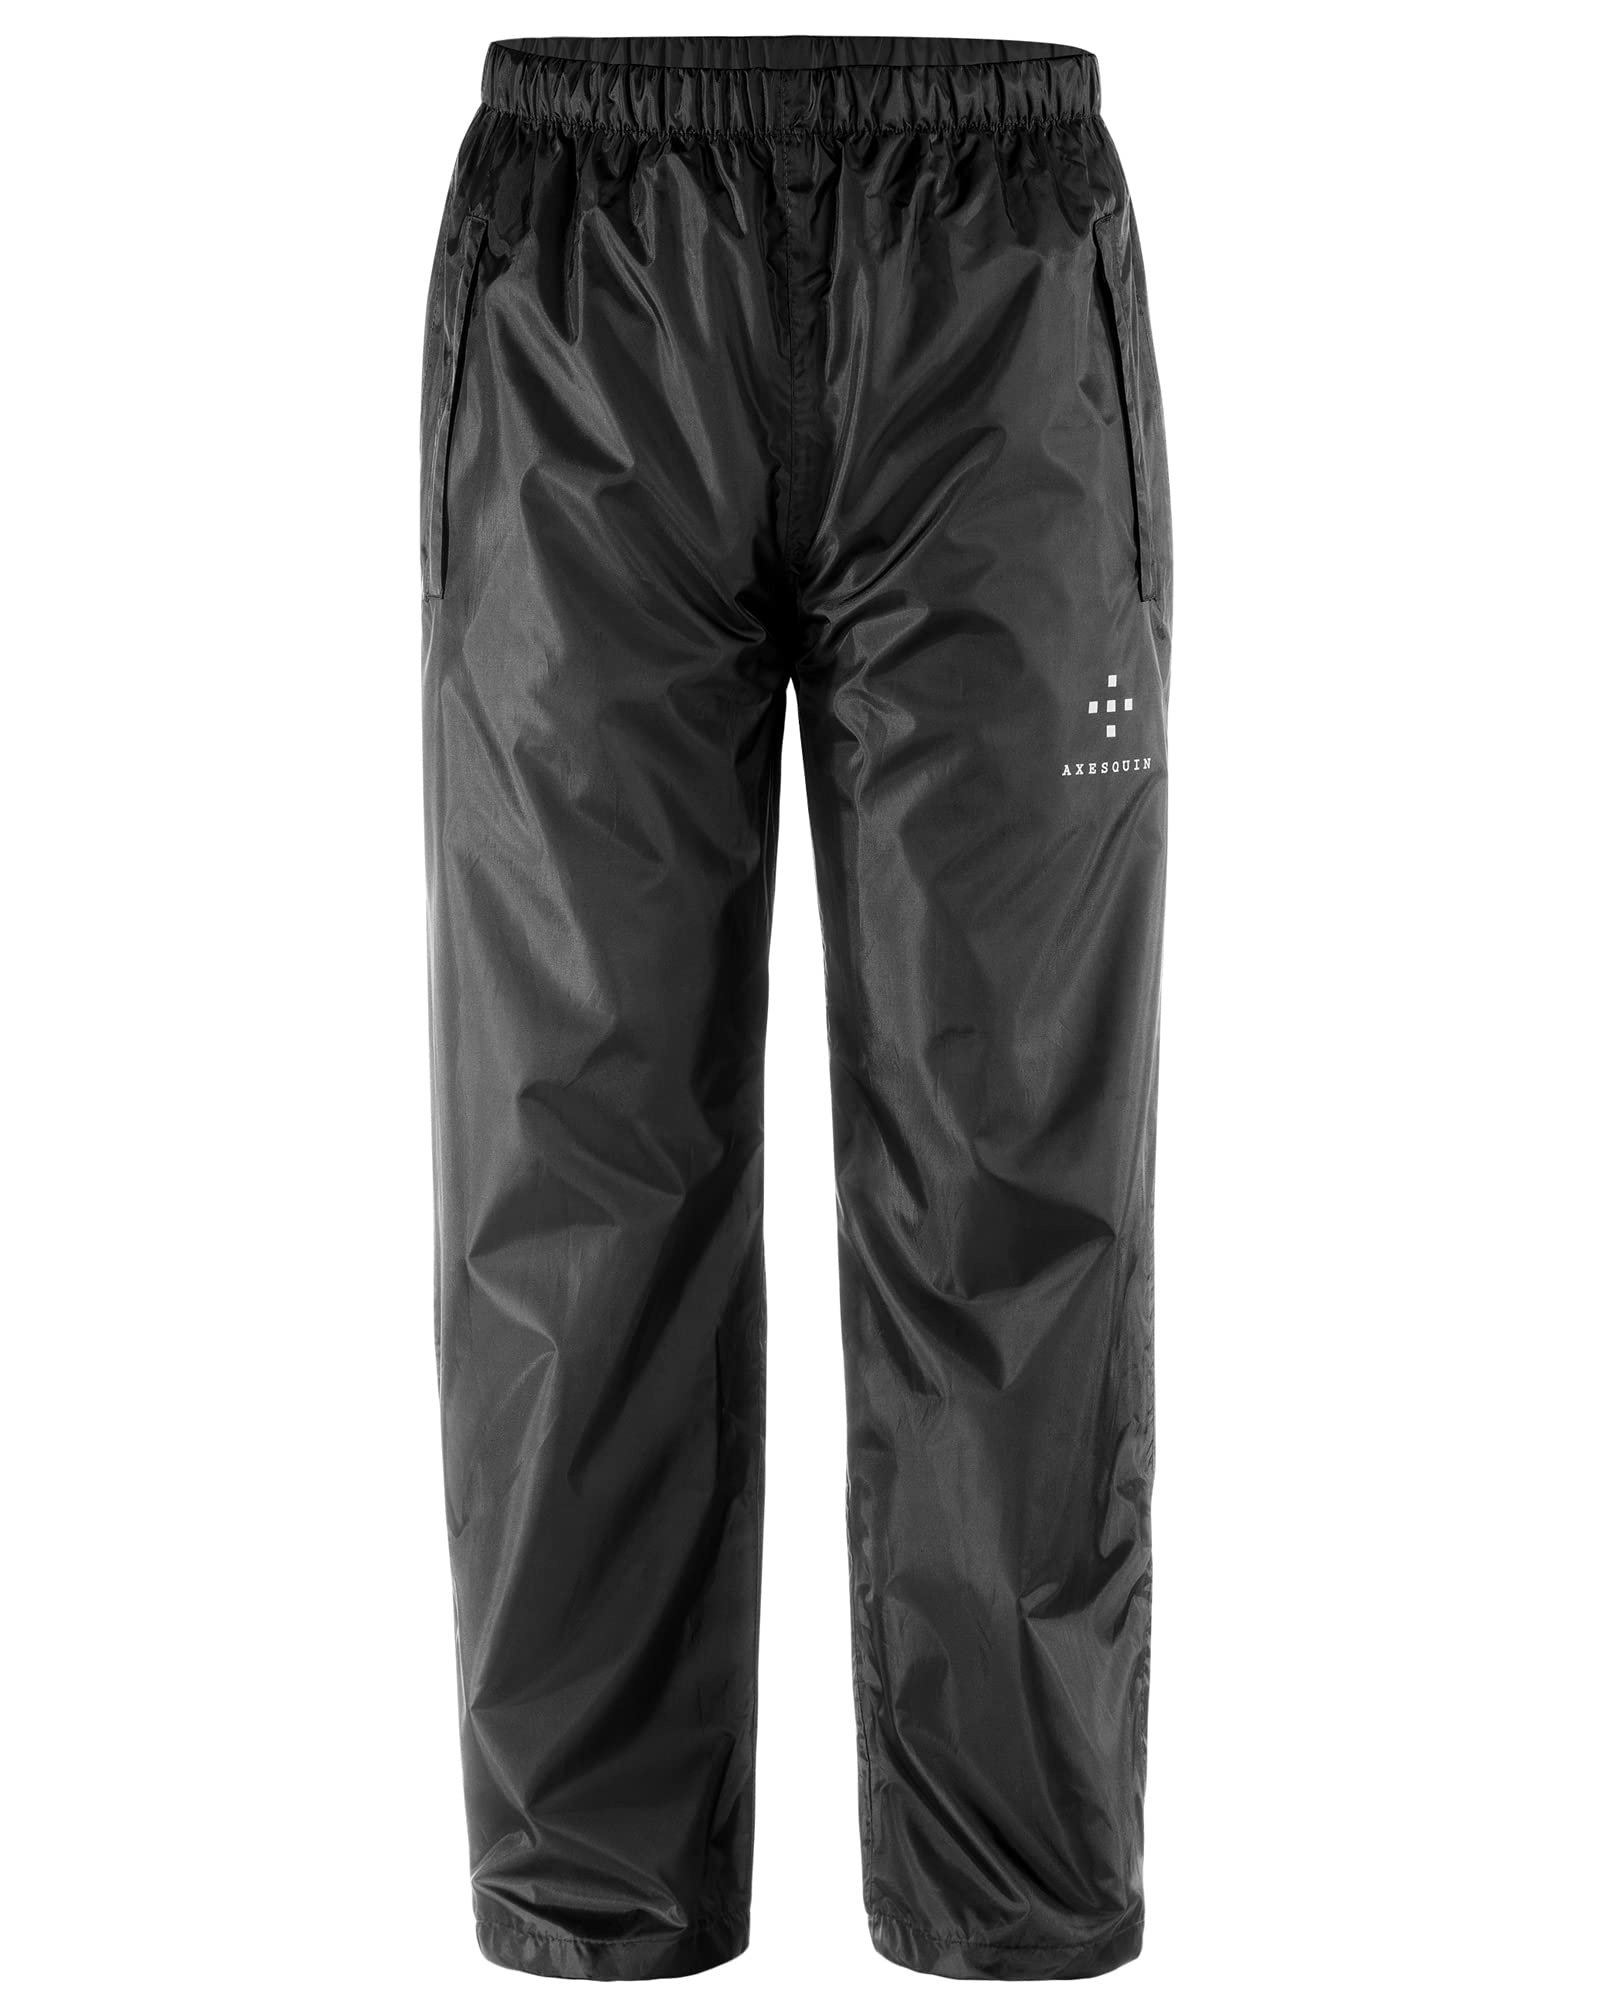 AXESQUIN Men's Rain Pants Waterproof Rain Over Pants with Pockets  Lightweight Packable Windproof Outdoor Hiking Fishing